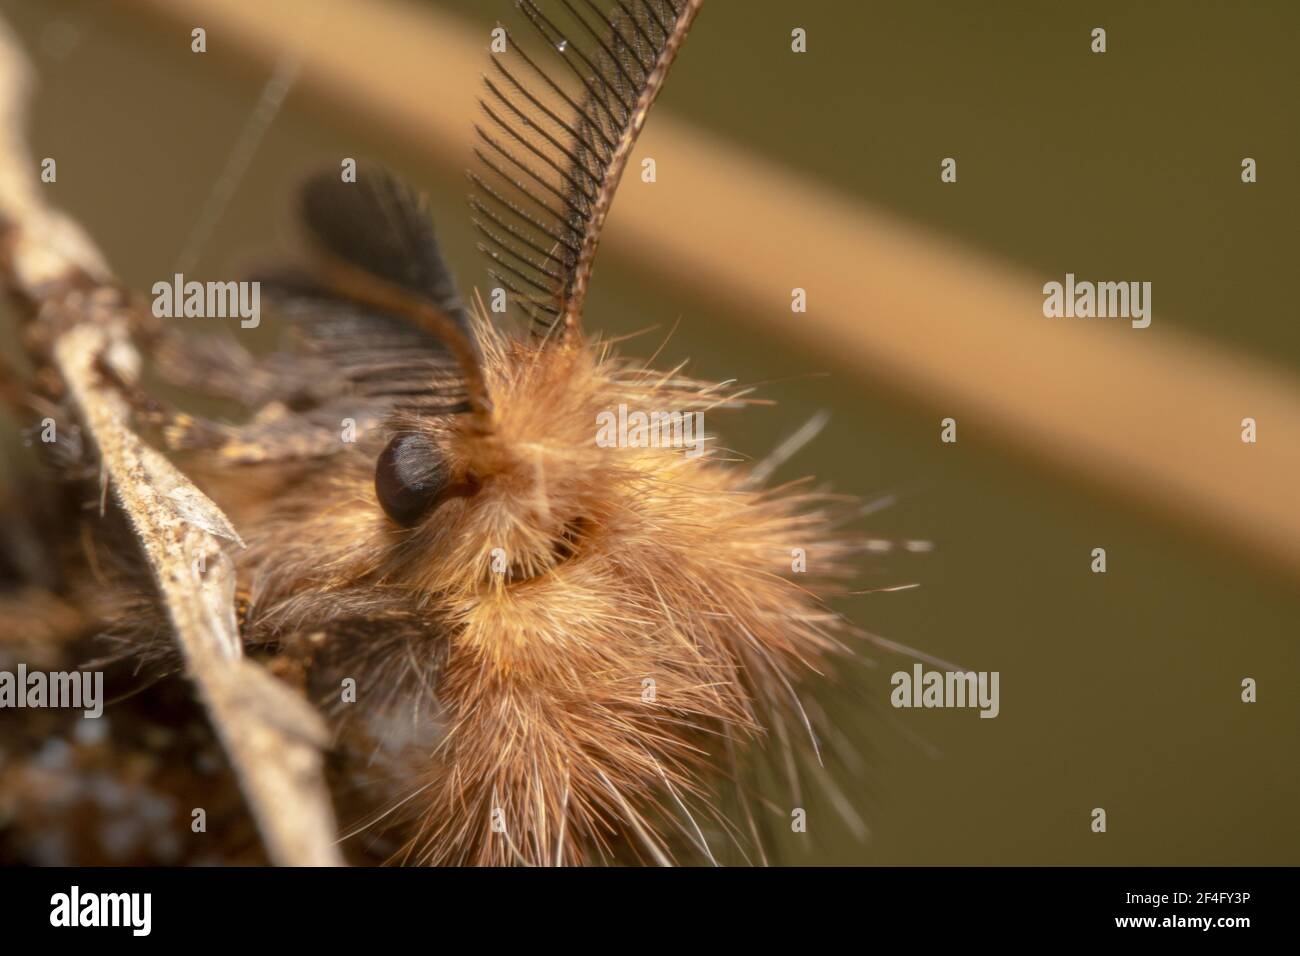 Orange furry moth with comb like antennas Stock Photo